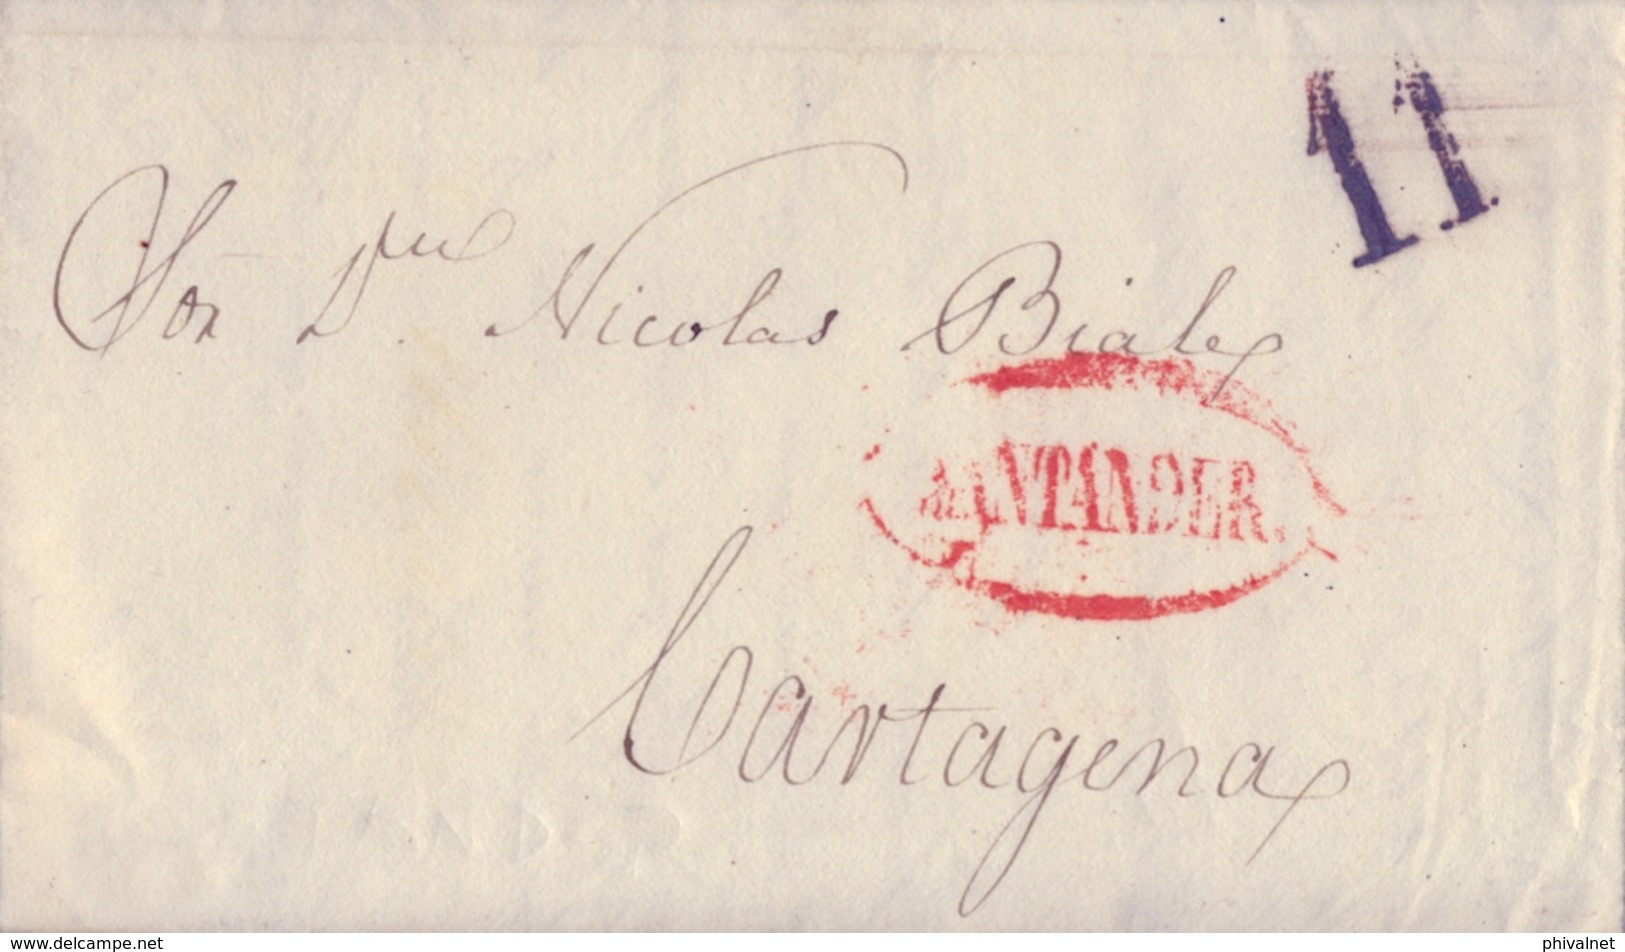 PREFILATELIA , 1841  , CARTA COMPLETA  , CANTABRIA  , SANTANDER - CARTAGENA  , T. 13 - ...-1850 Préphilatélie